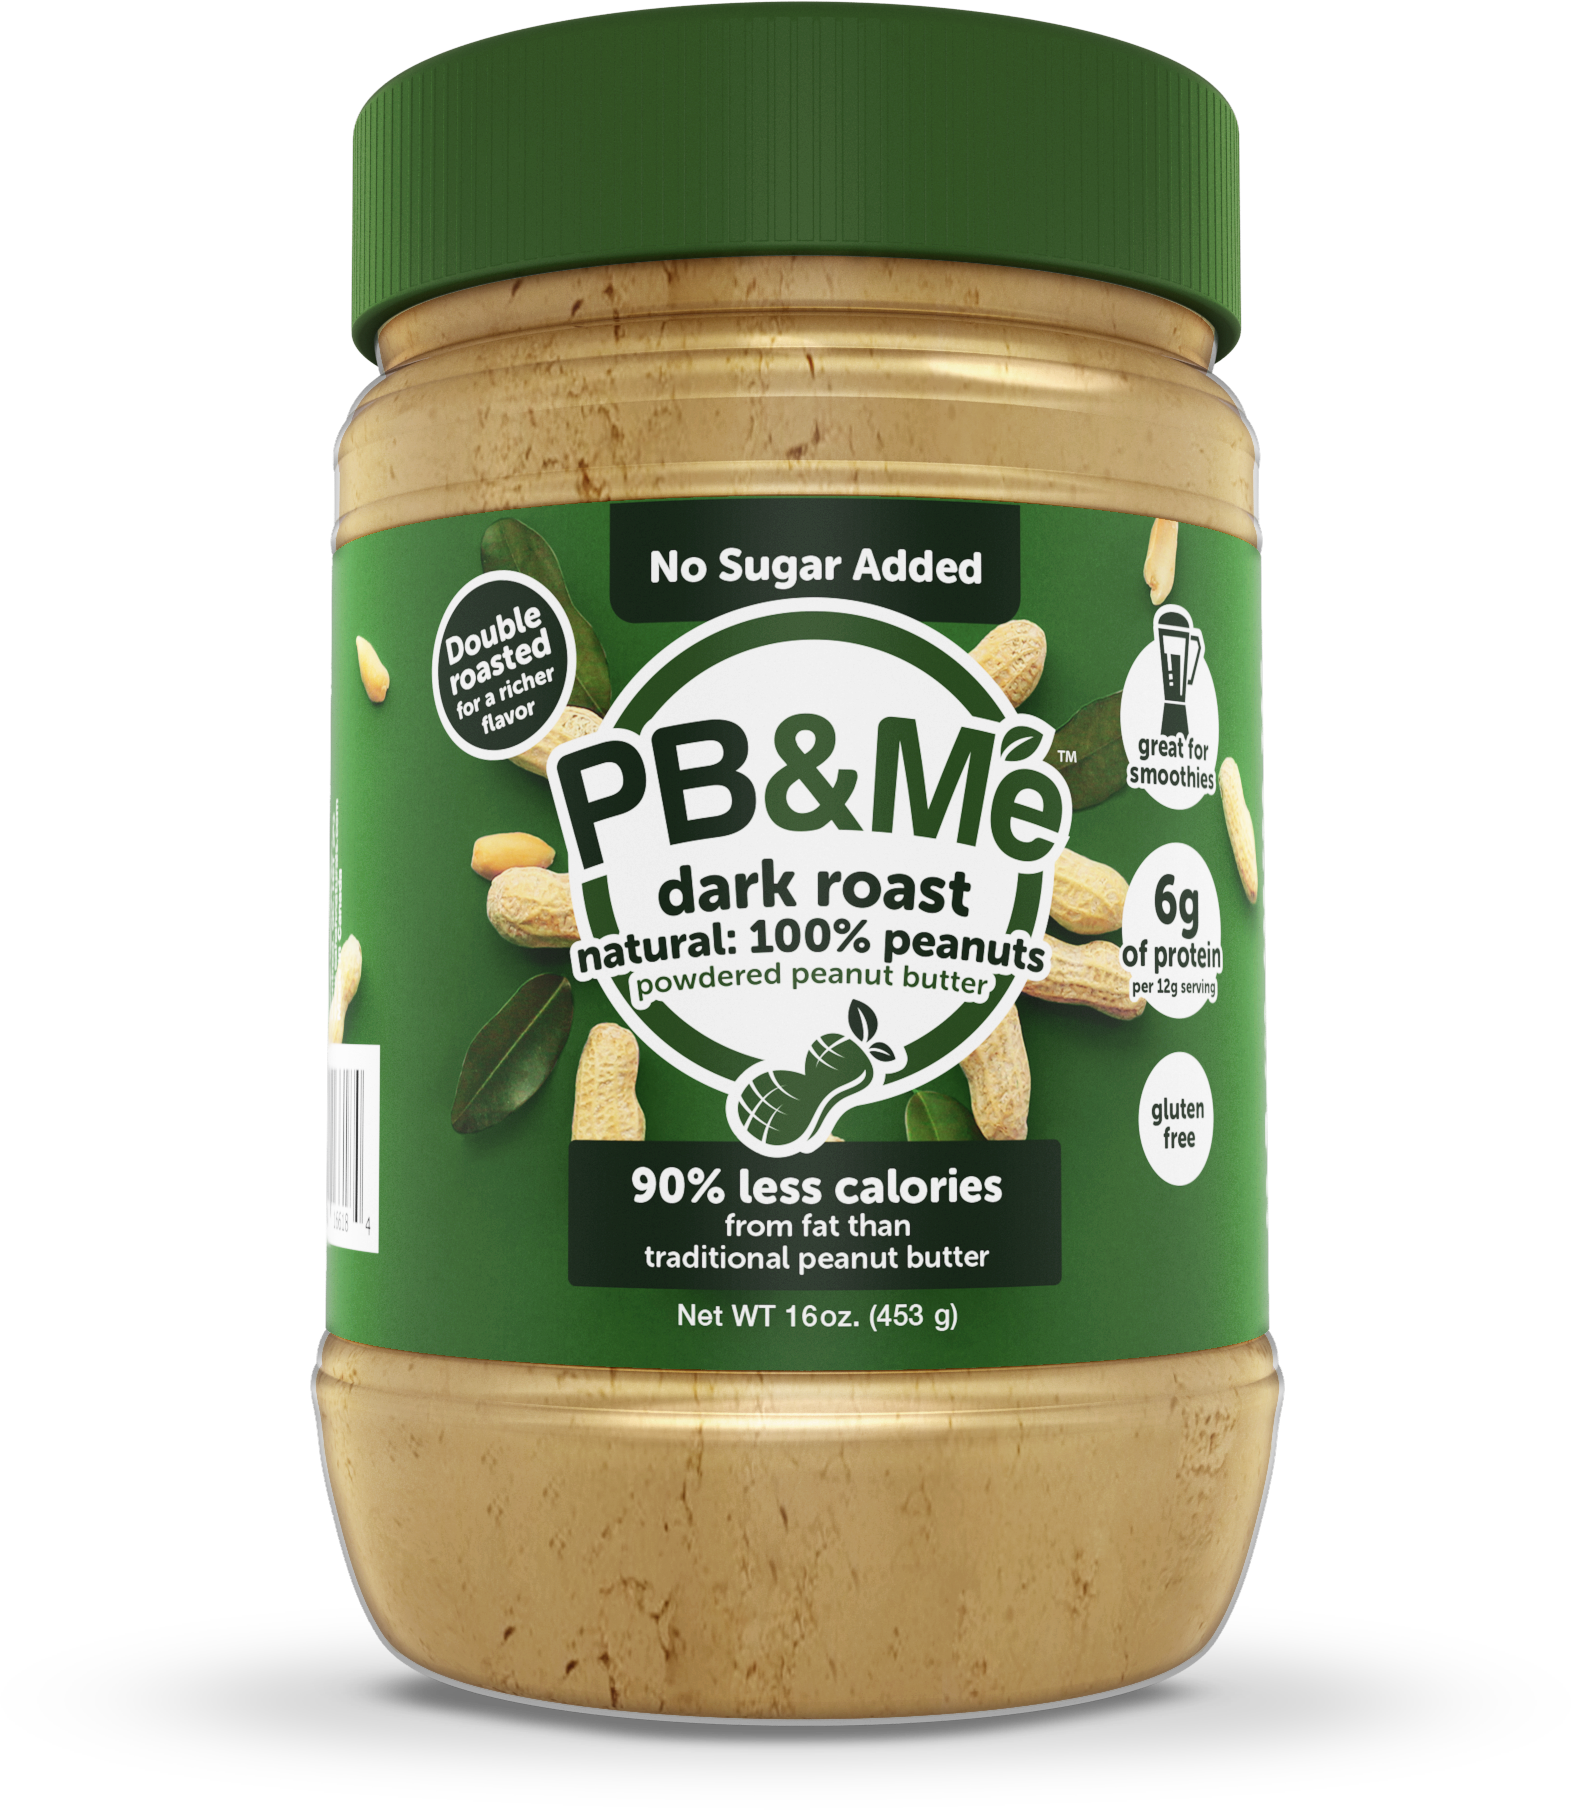 PB&Me - Powdered Peanut Butter - Dark Roast - No Sugar Added (1LB)